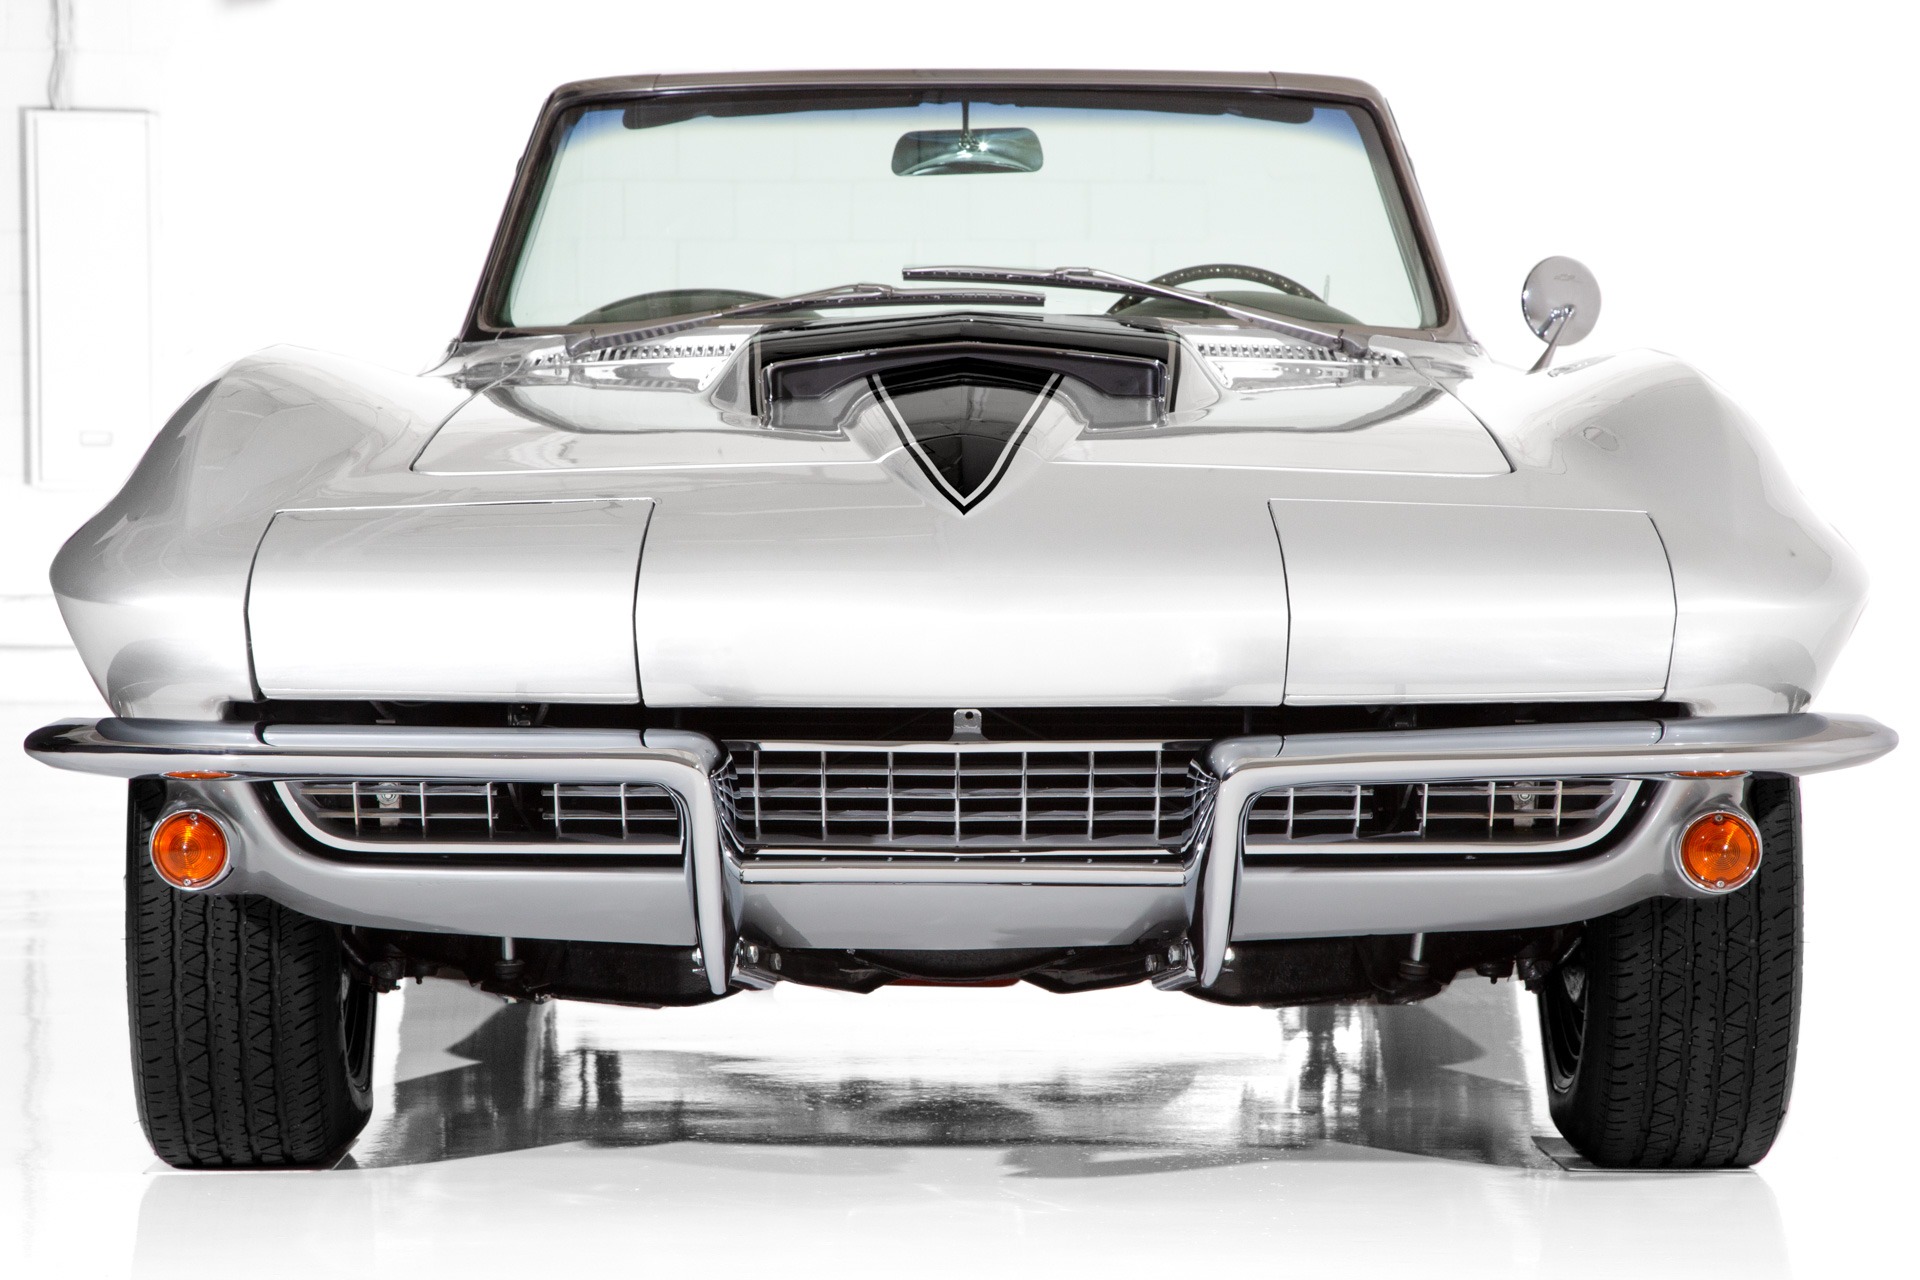 For Sale Used 1966 Chevrolet Corvette Silver/Black  4-Speed | American Dream Machines Des Moines IA 50309